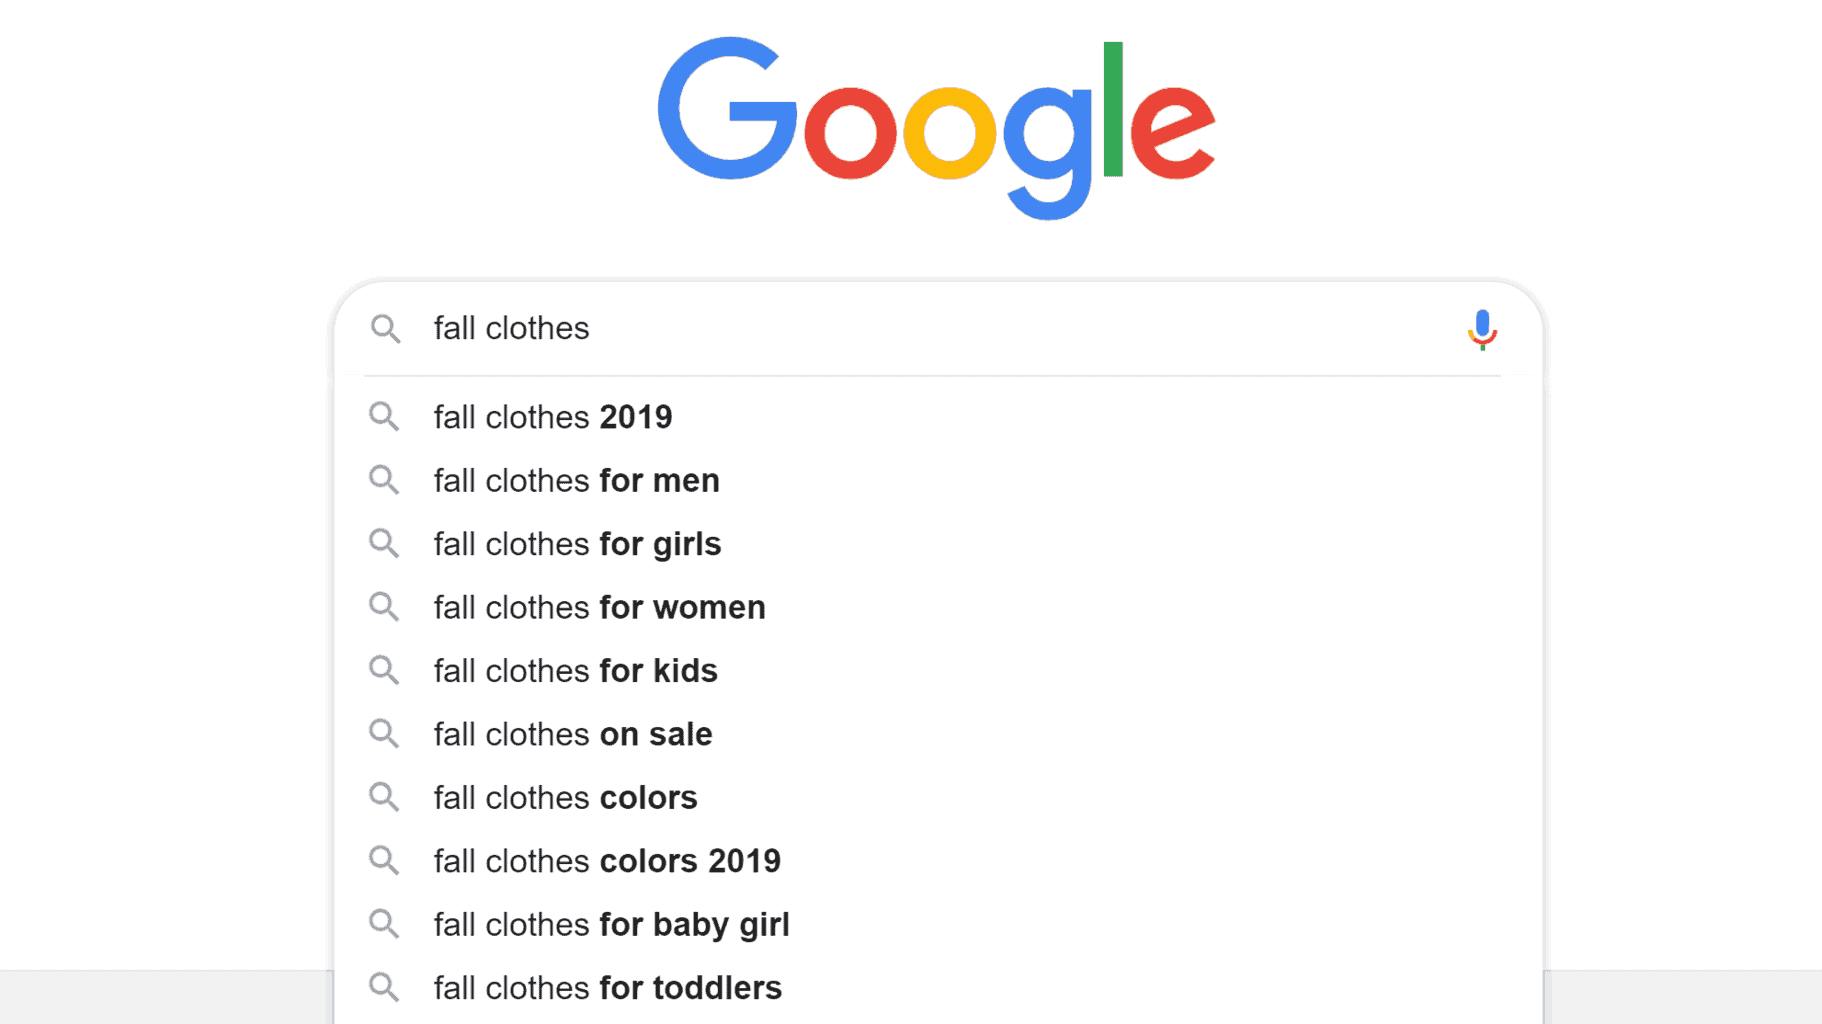 Fall clothes short tail keyword on Google